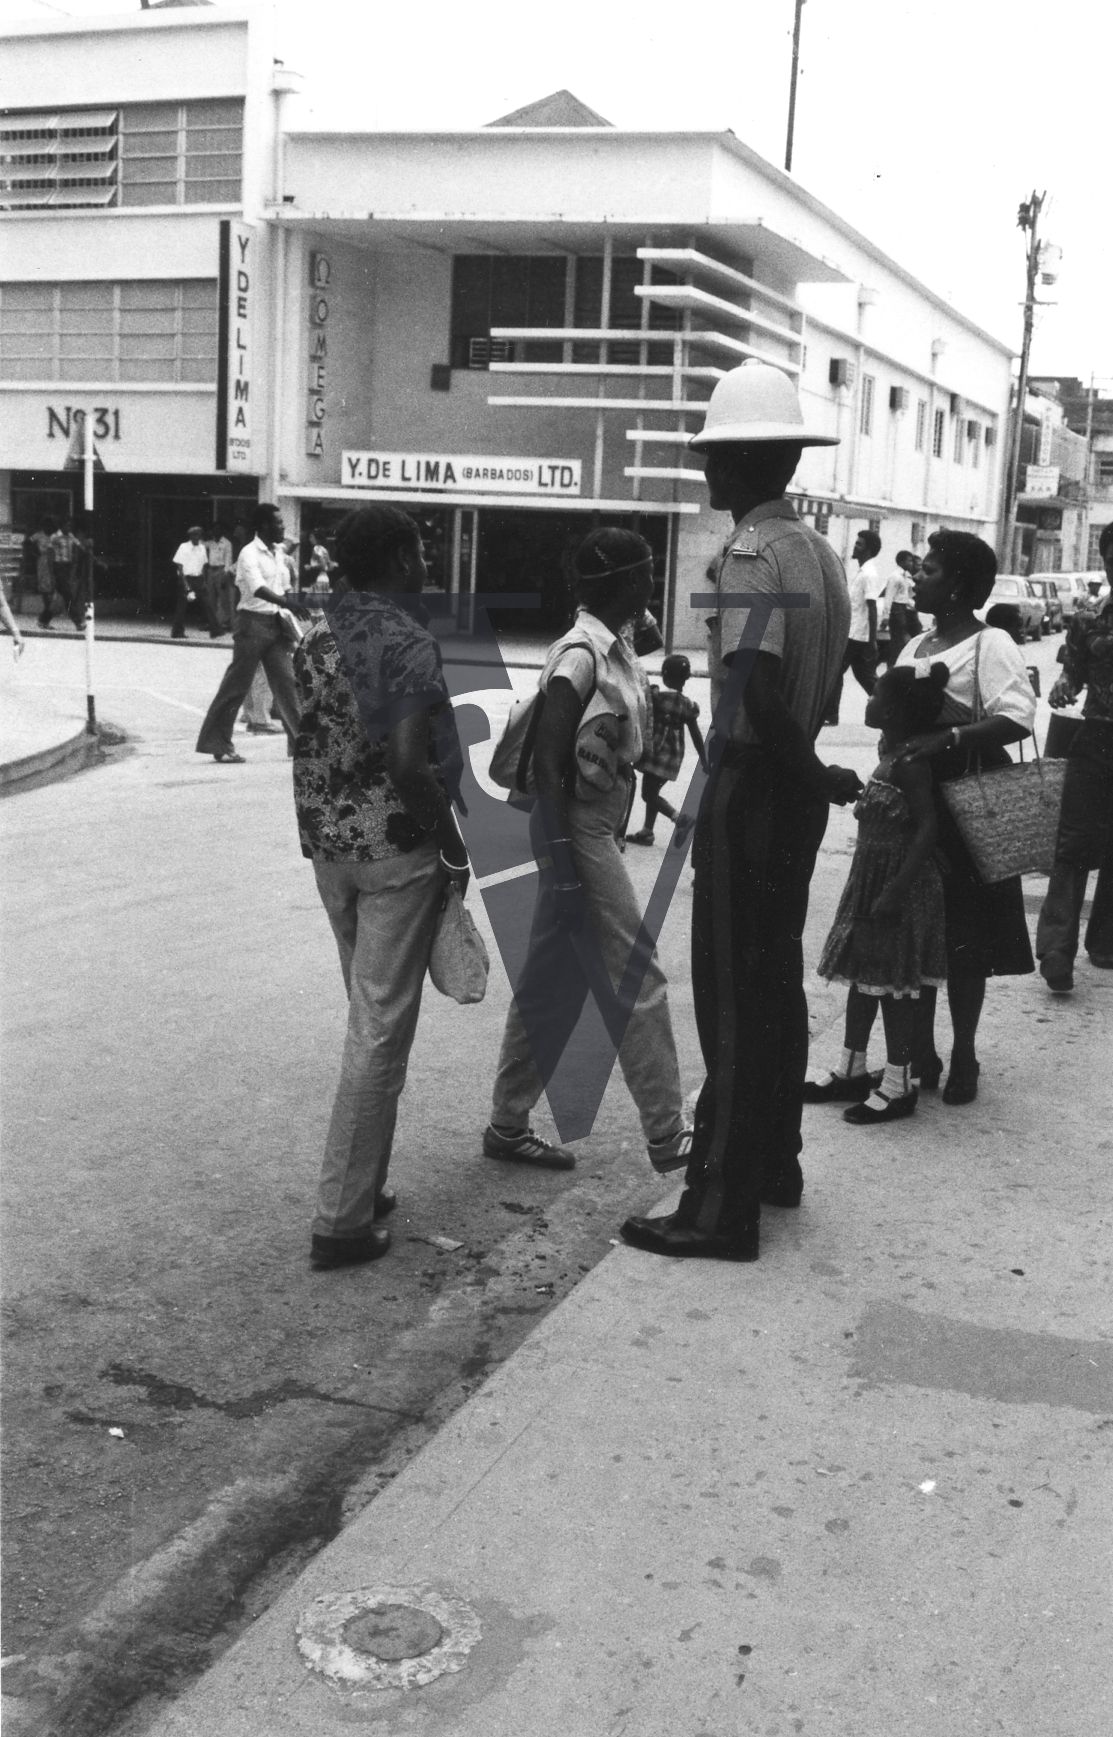 Barbados, street scene, Y.De Lima Ltd..